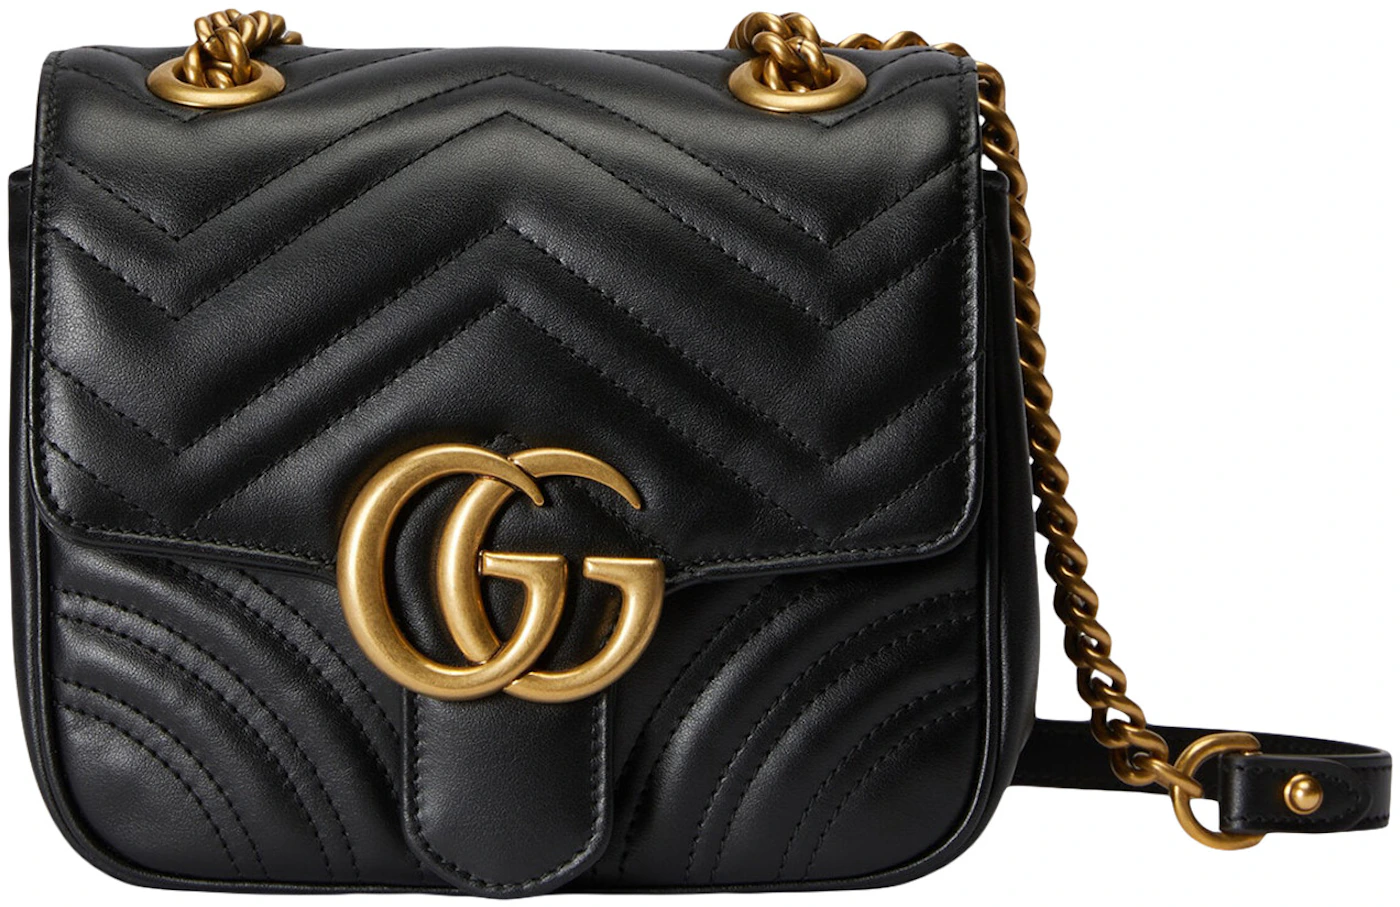 Gucci GG Mini Shoulder Bag Matelasse Black in Antique Gold-tone - US